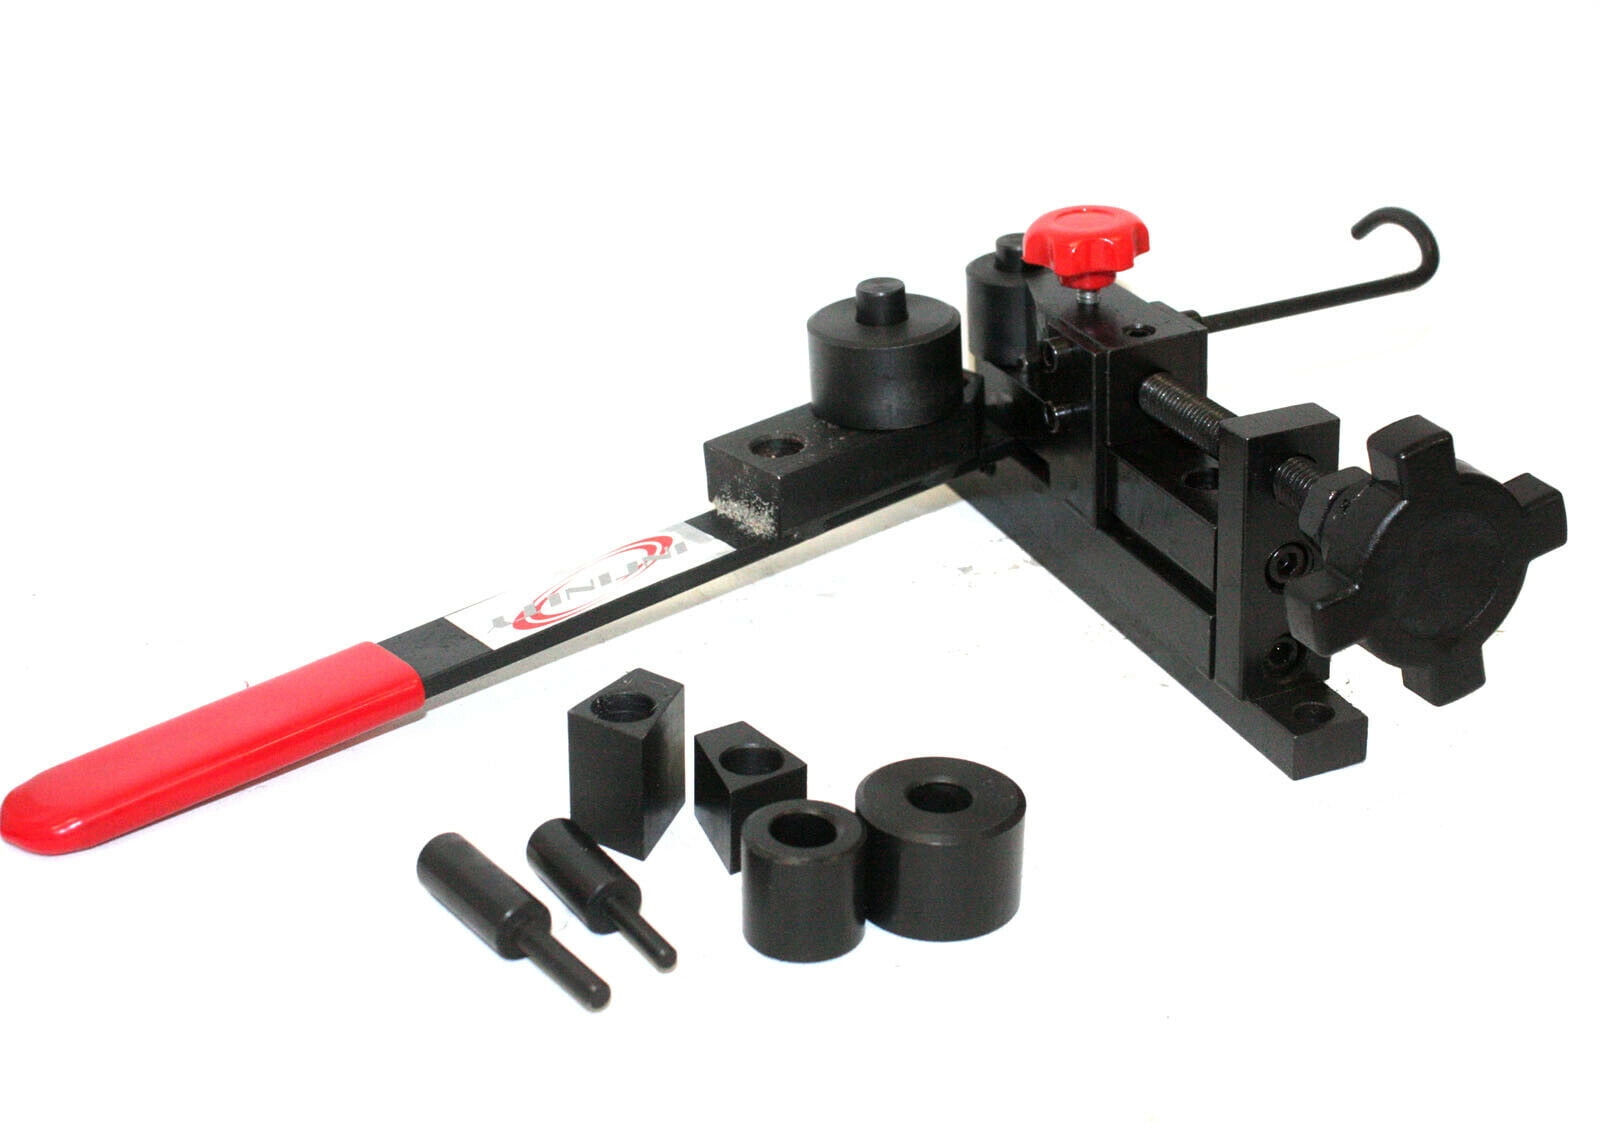 Manual Mounting Universal Mini Bending Bender Forms Wire Flat Metal And Tubing 